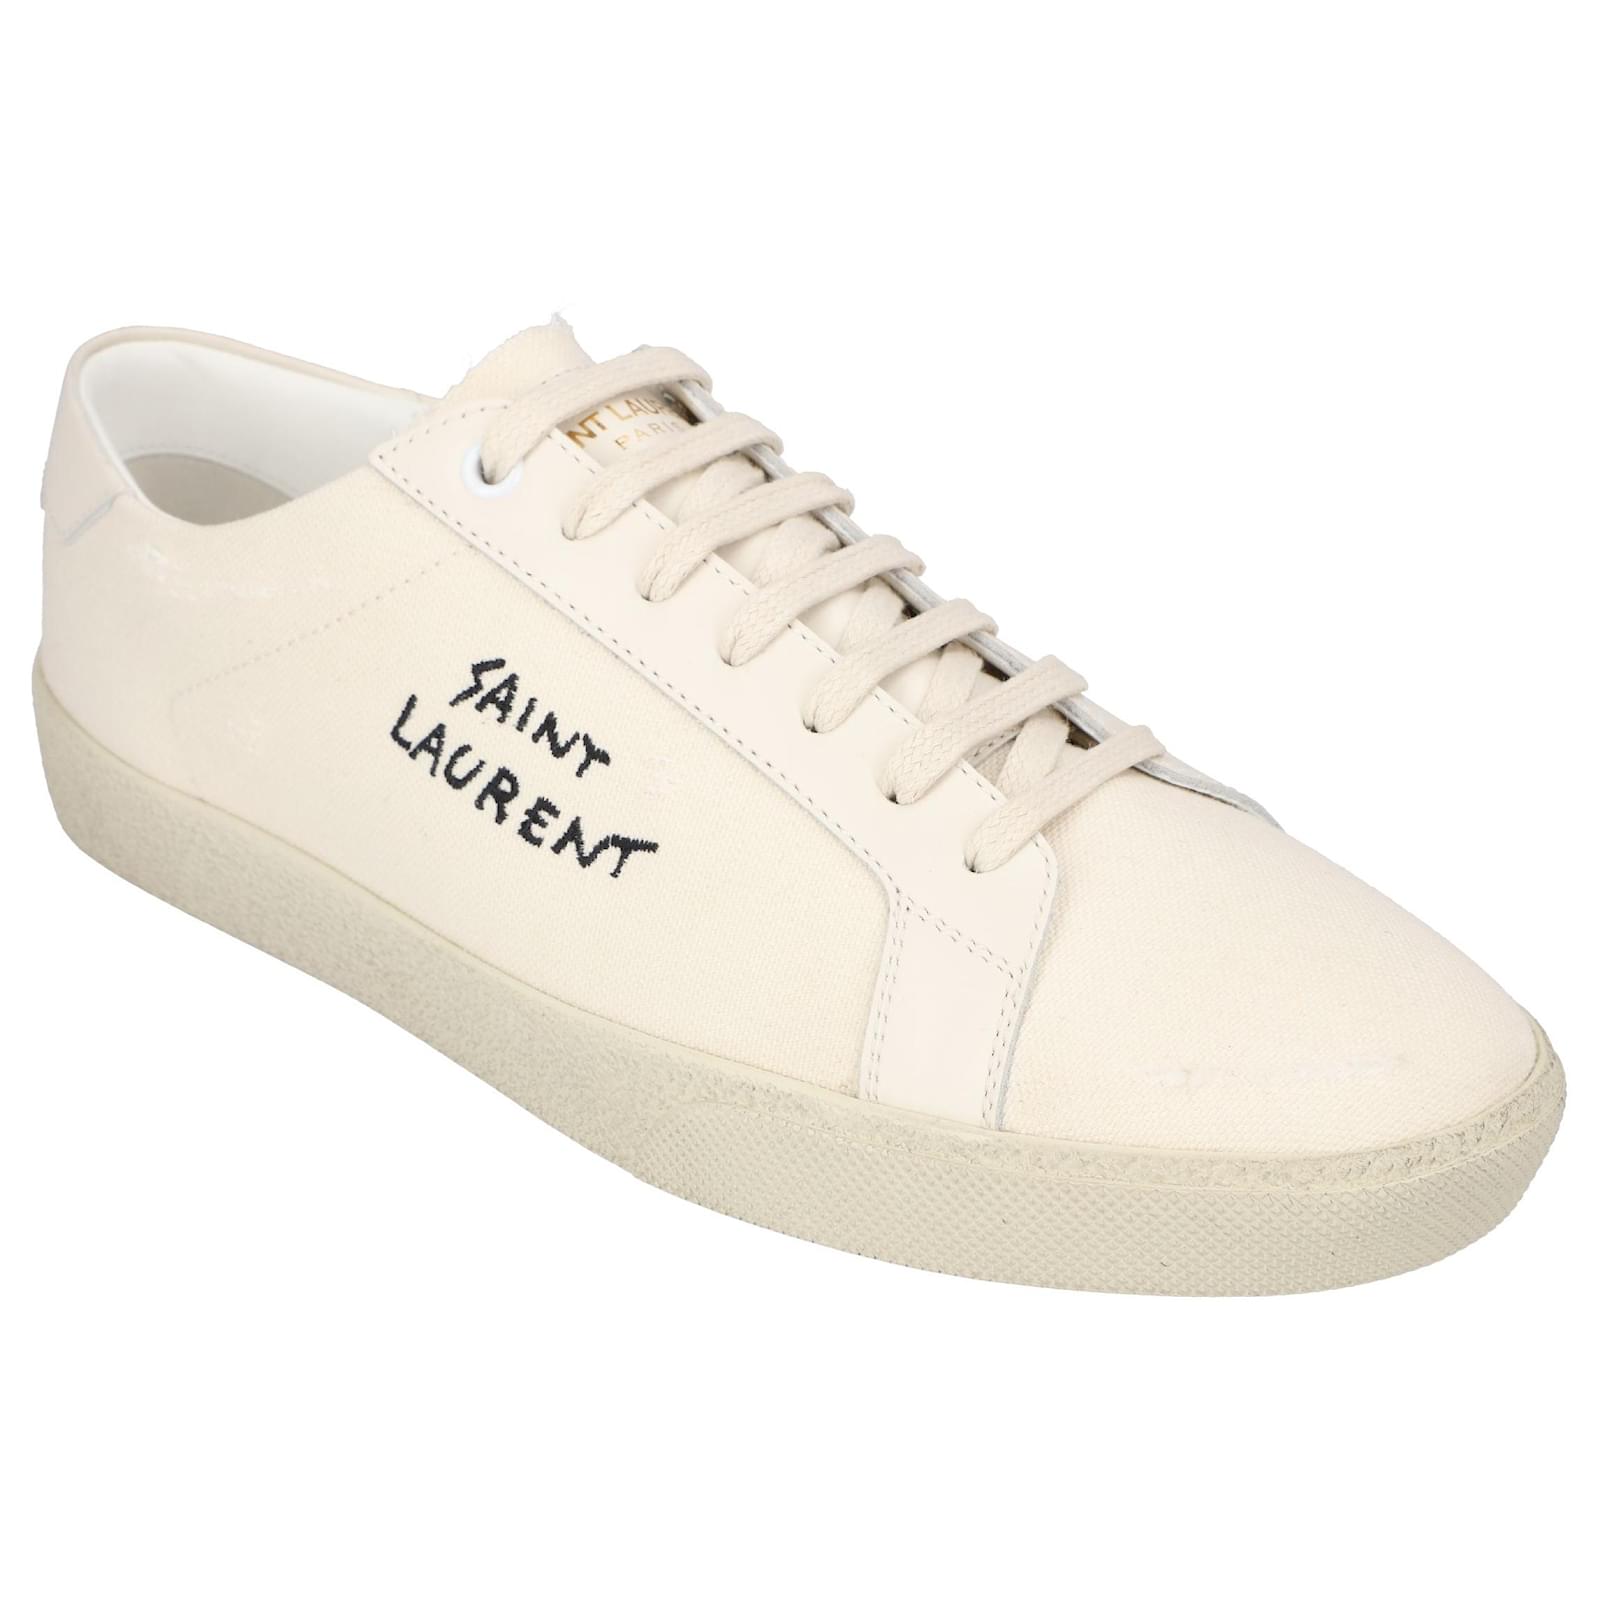 Saint Laurent Court Classic SL06 sneakers for Men - White in KSA | Level  Shoes